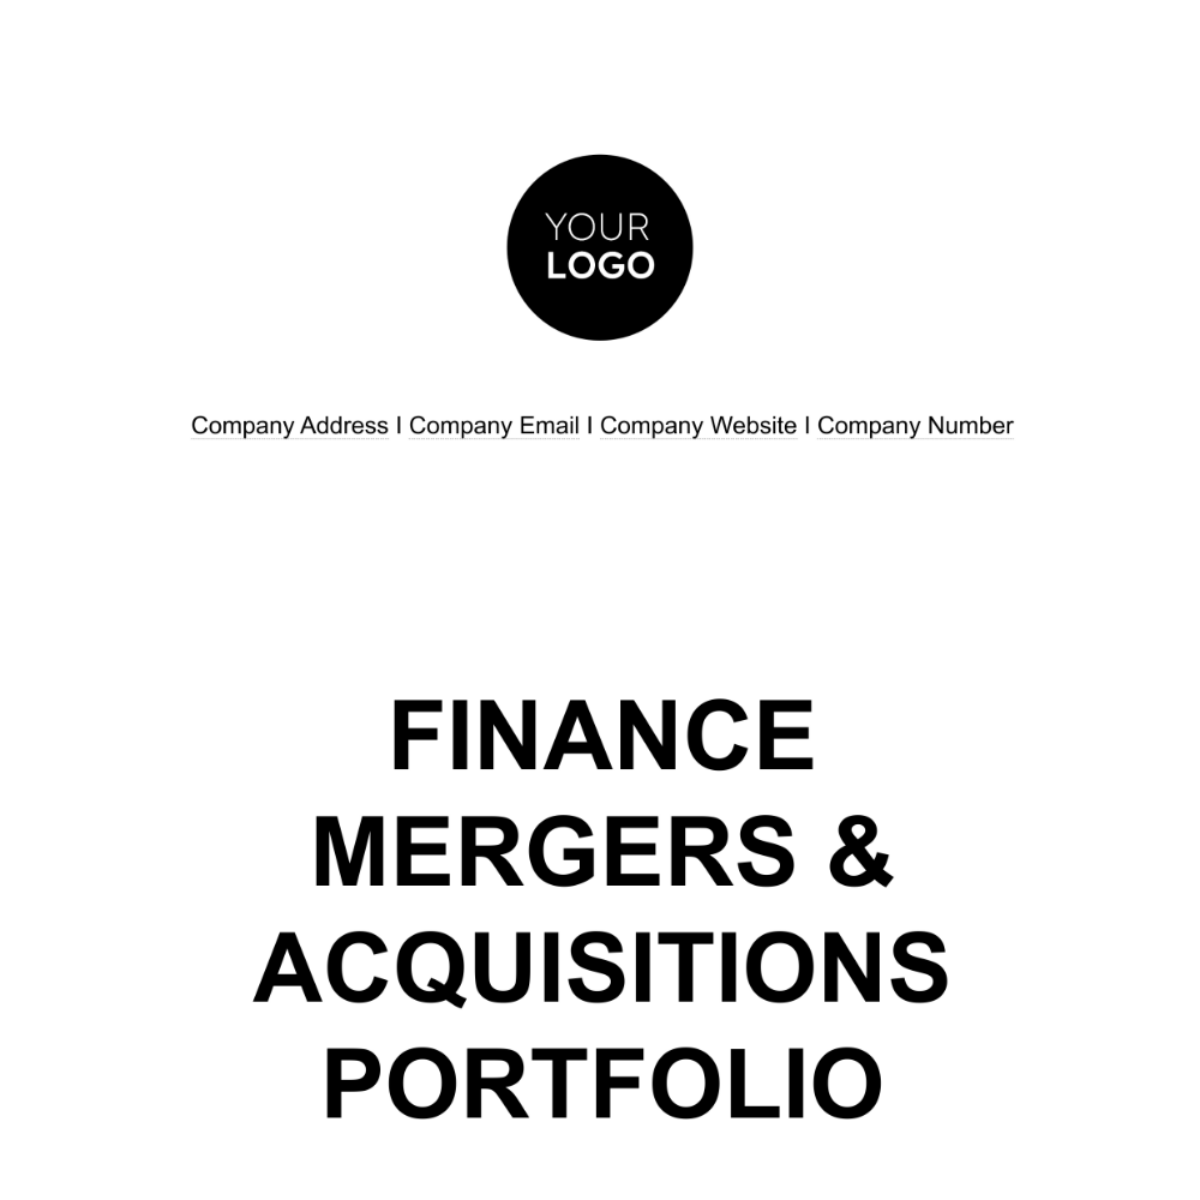 Finance Mergers & Acquisitions Portfolio Template